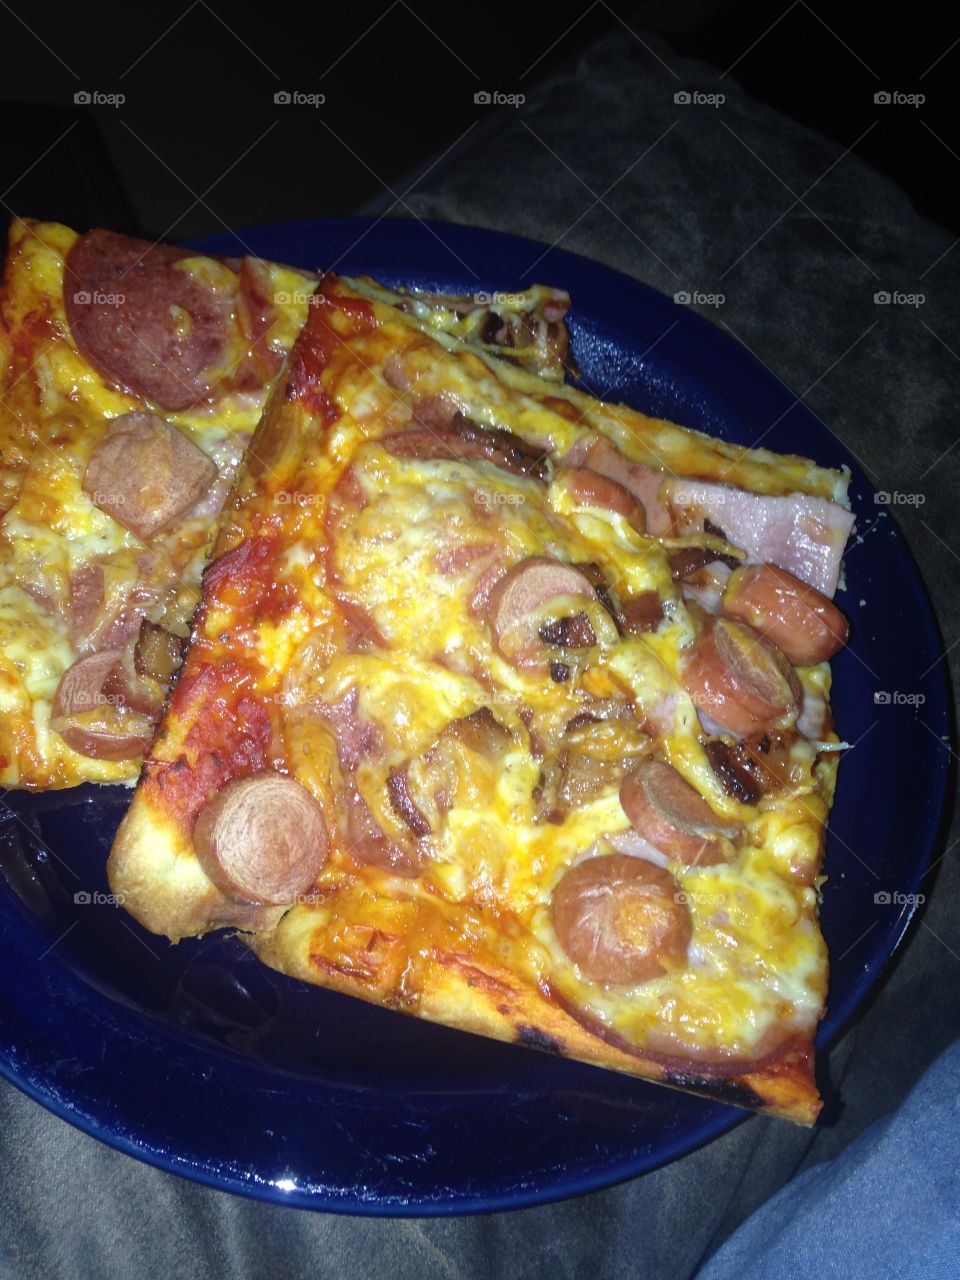 Homemade pizza 